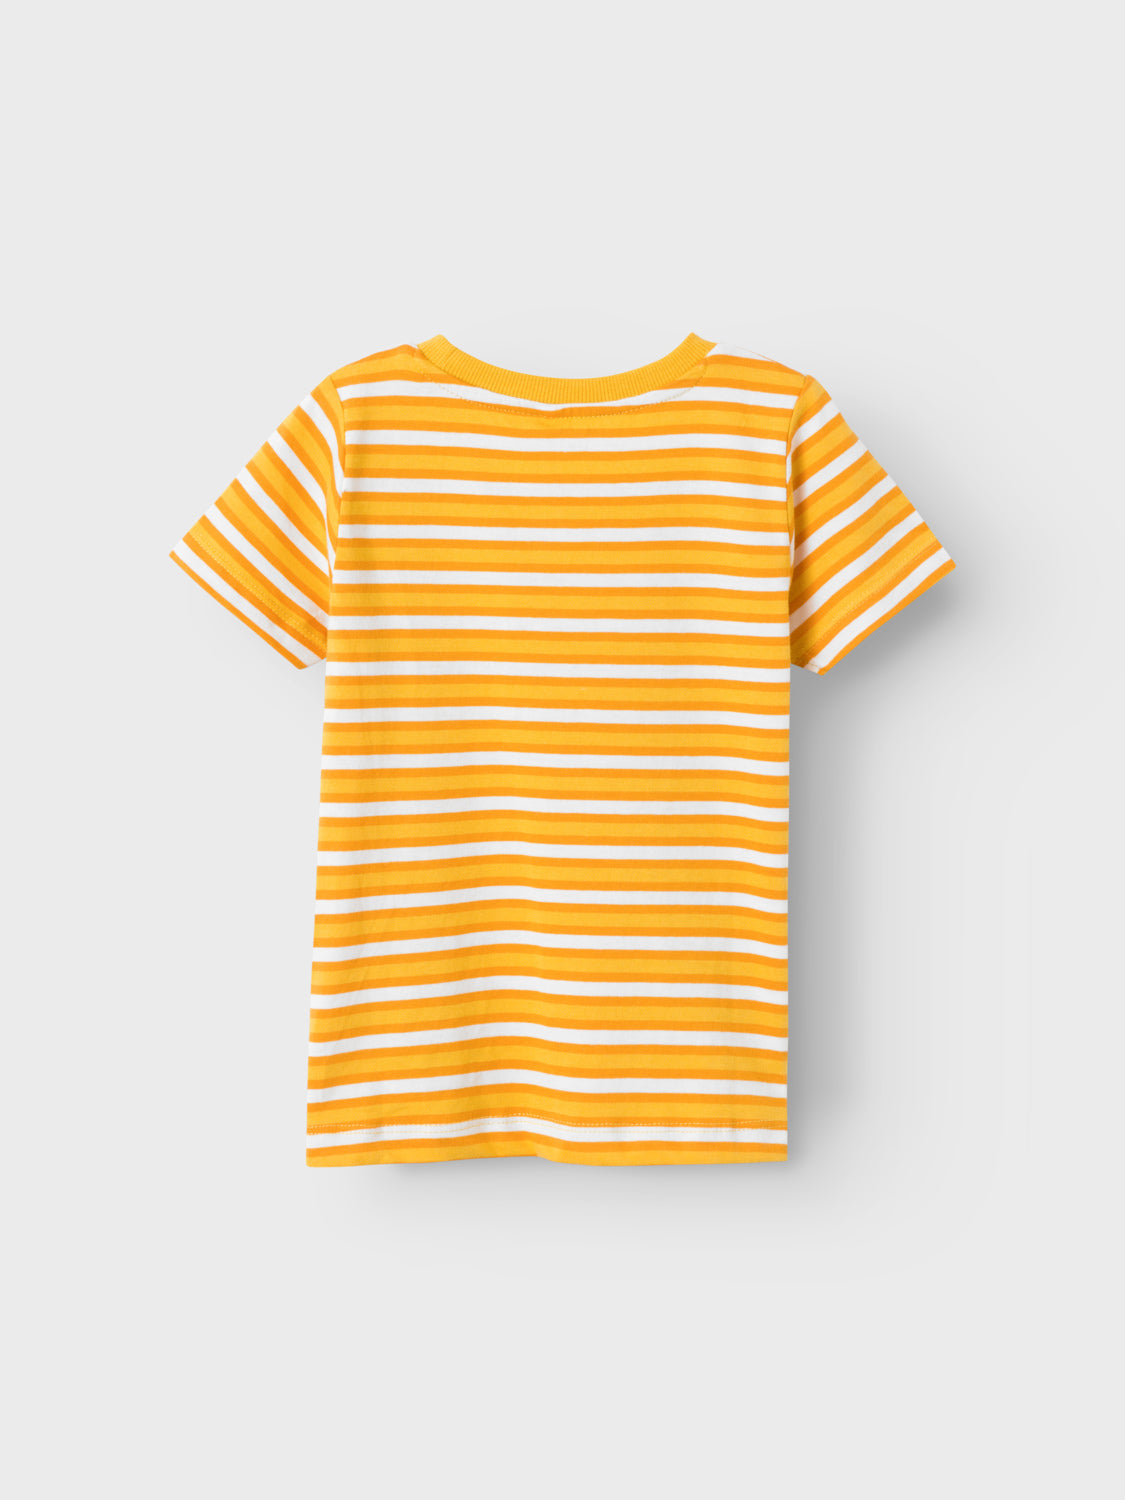 – It Spicy - Plus City Mustard T-Shirts NMMDIK & Name Tops